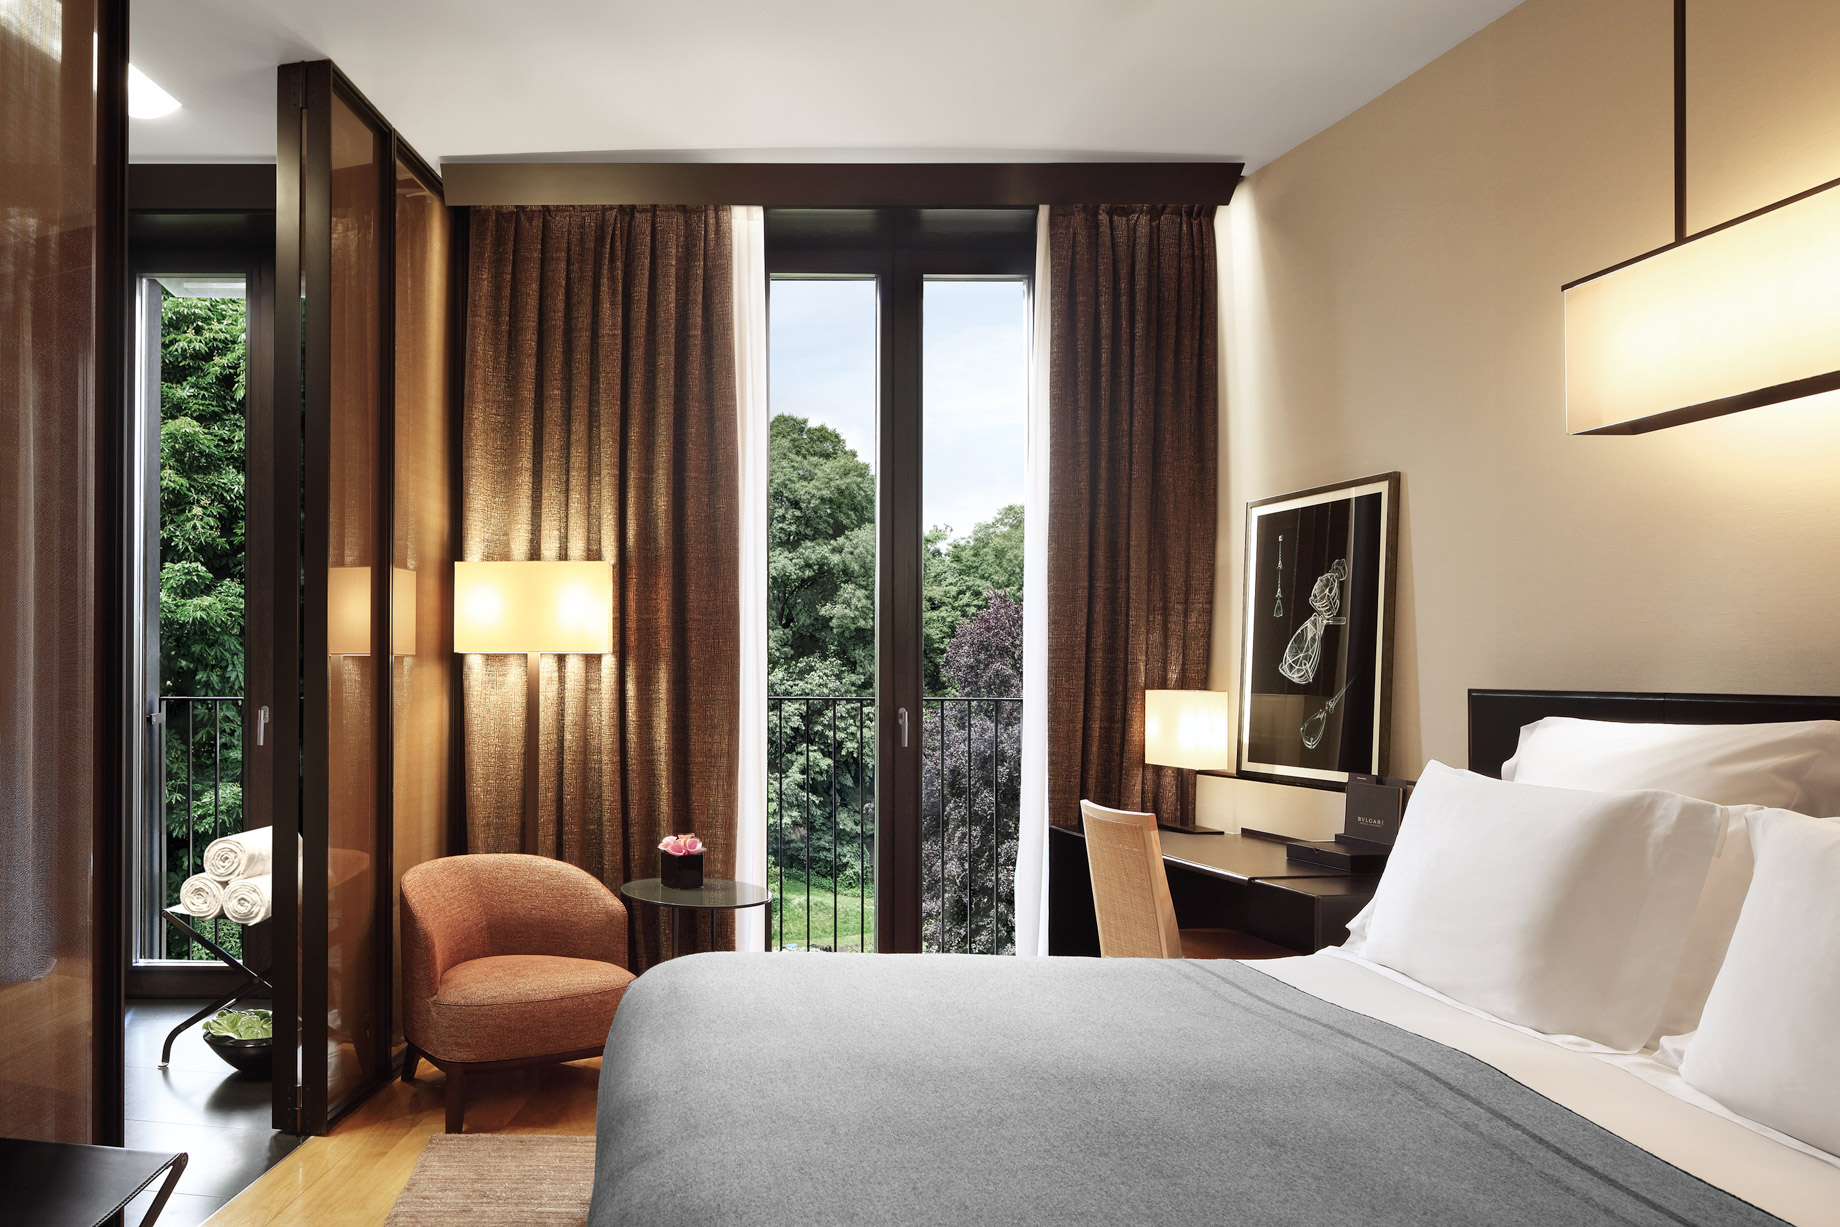 Bvlgari Hotel Milano – Milan, Italy – Premium Room Bedroom